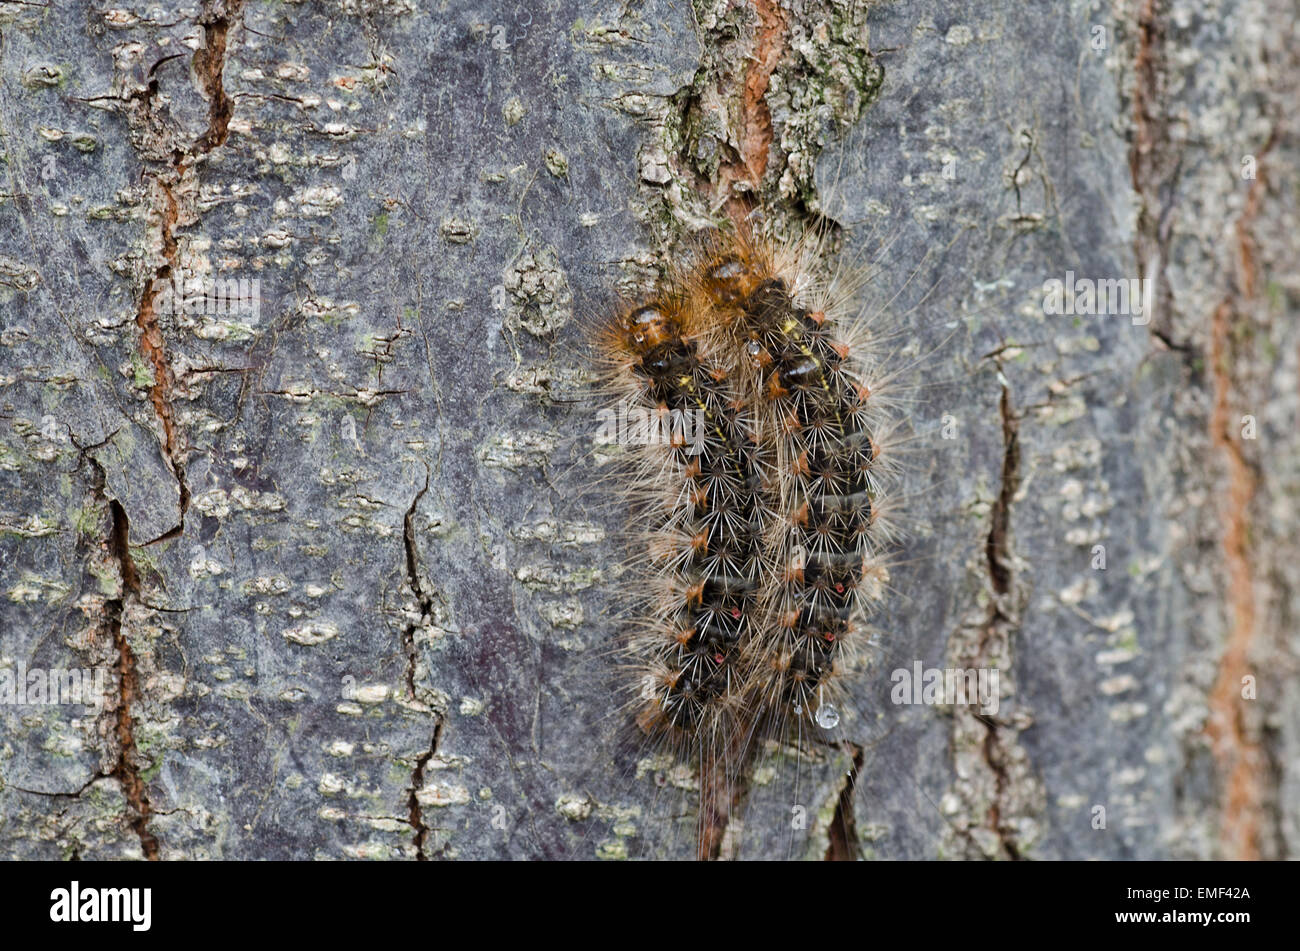 https://c8.alamy.com/comp/EMF42A/white-cedar-moth-caterpillars-on-the-bark-of-the-white-cedar-EMF42A.jpg